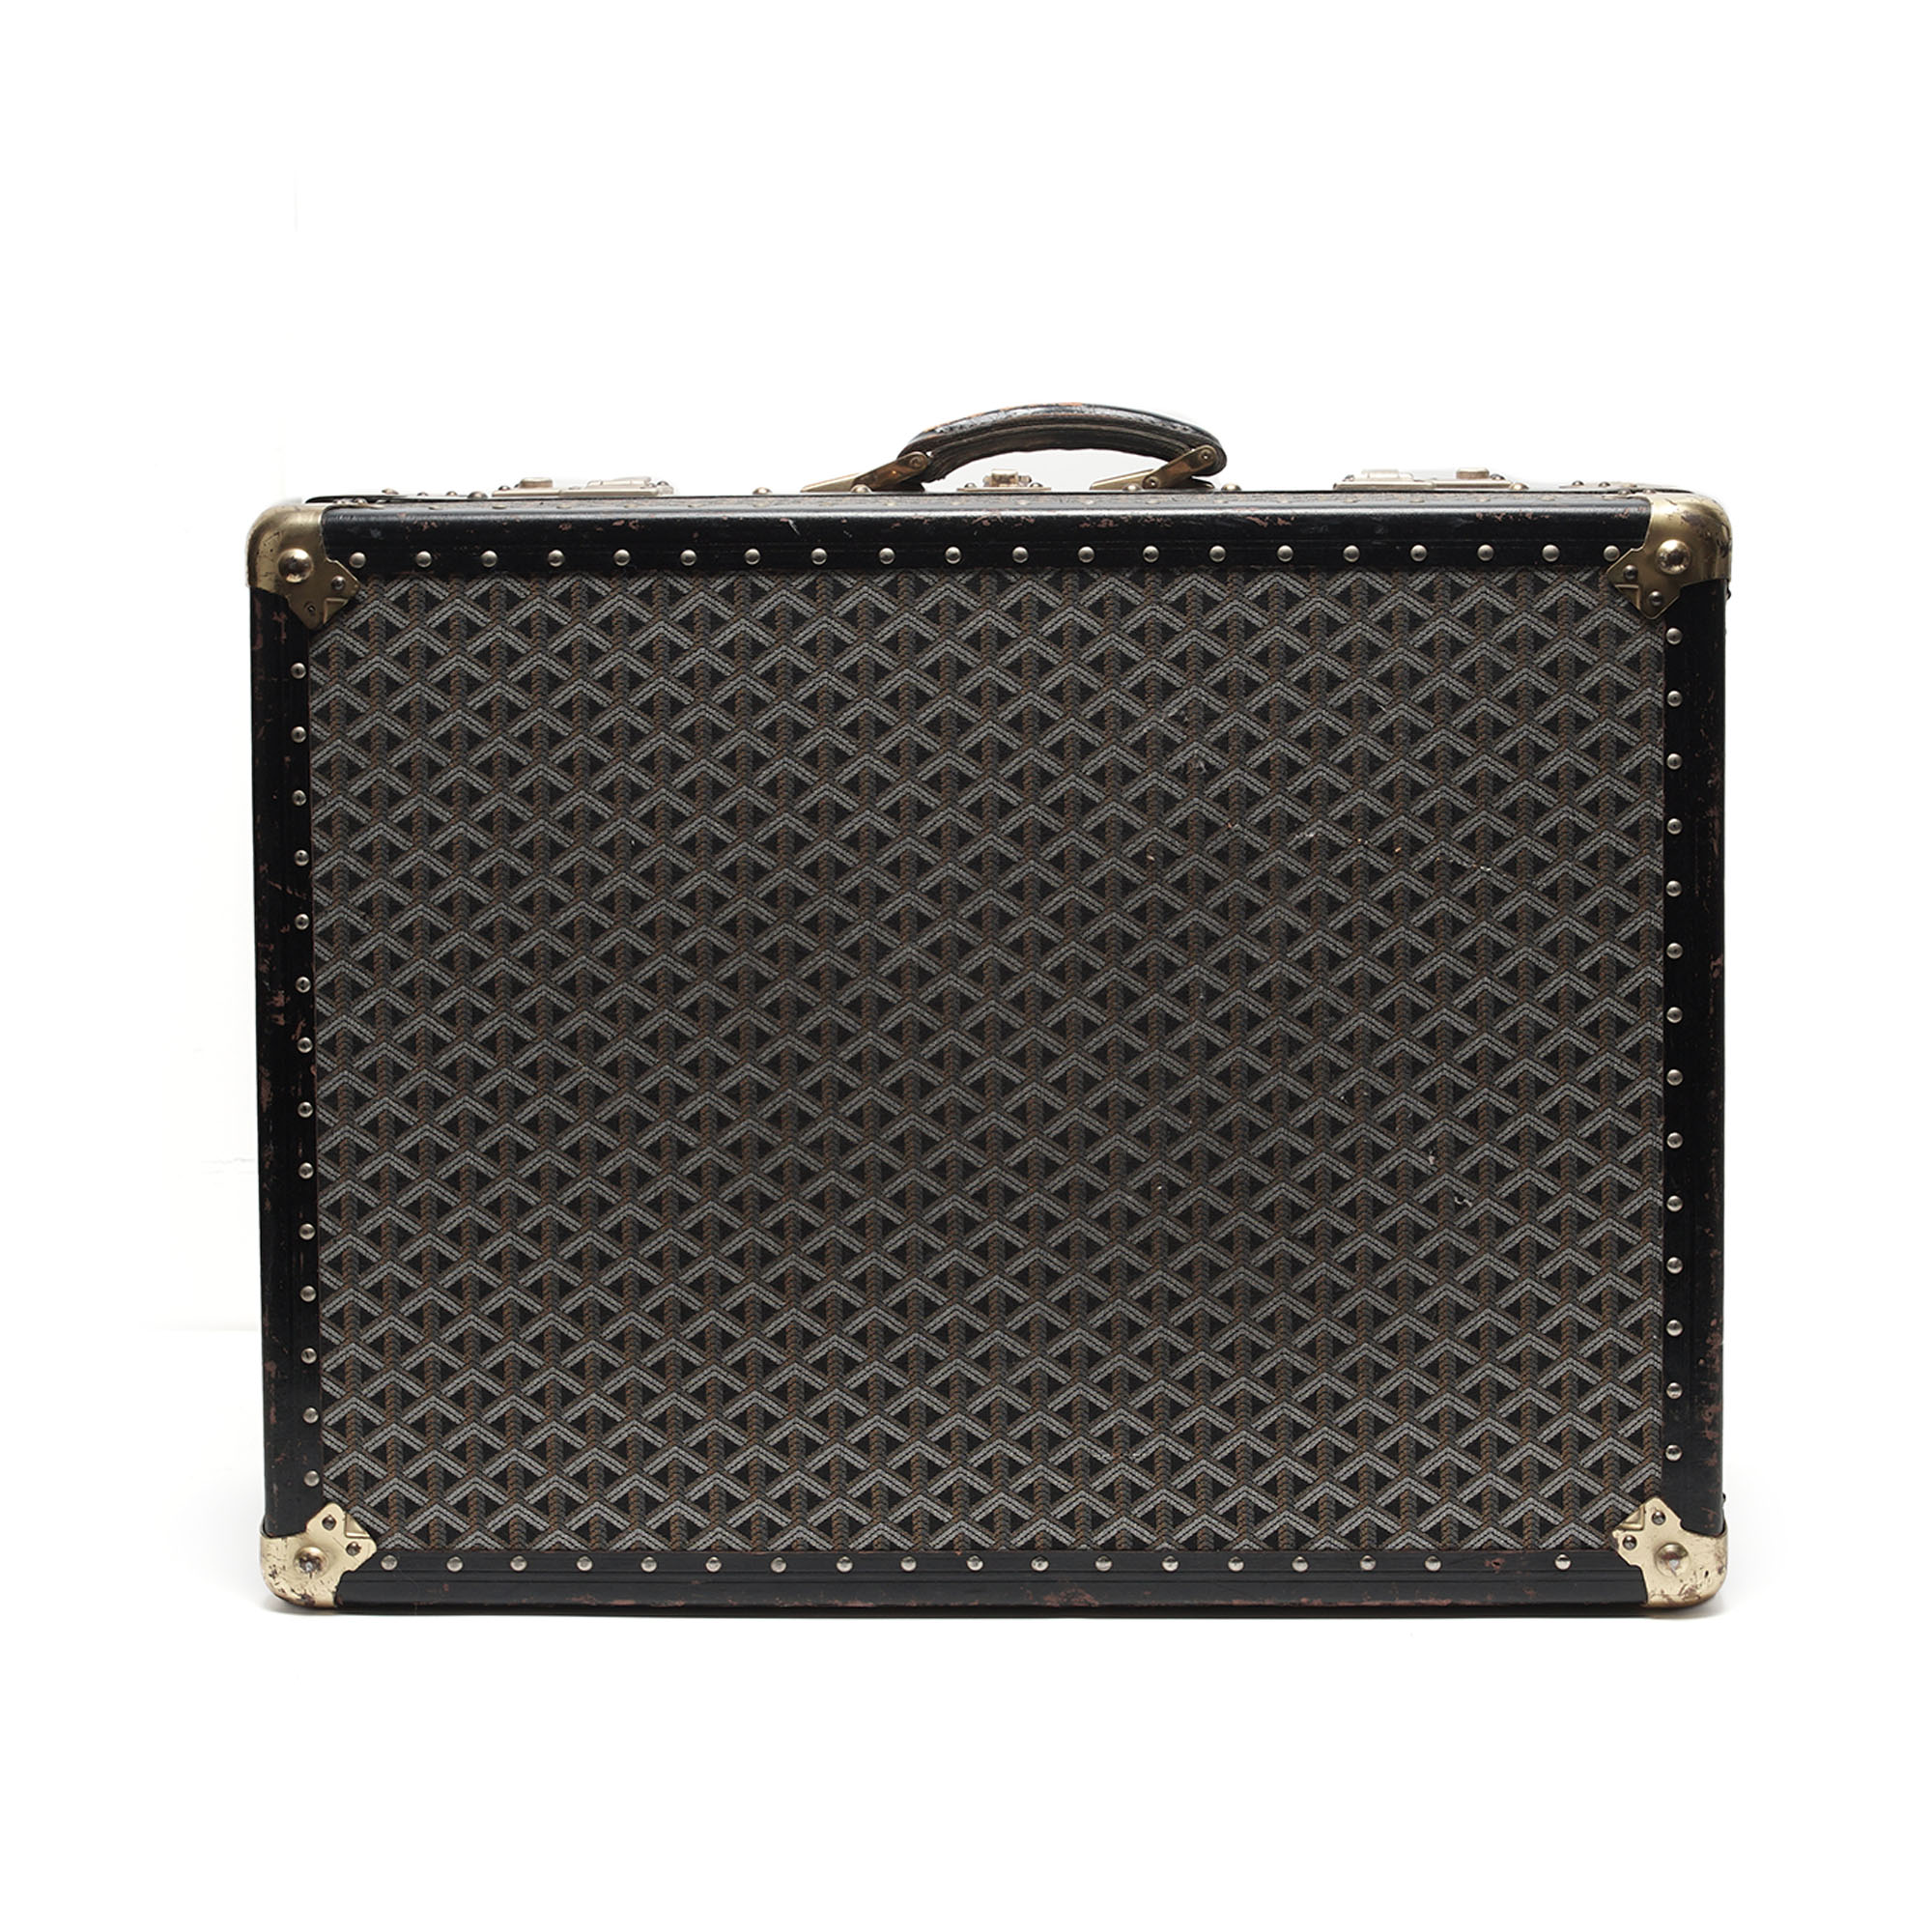 Vntg: Goyard x Louis luggage collection on . Starting bid